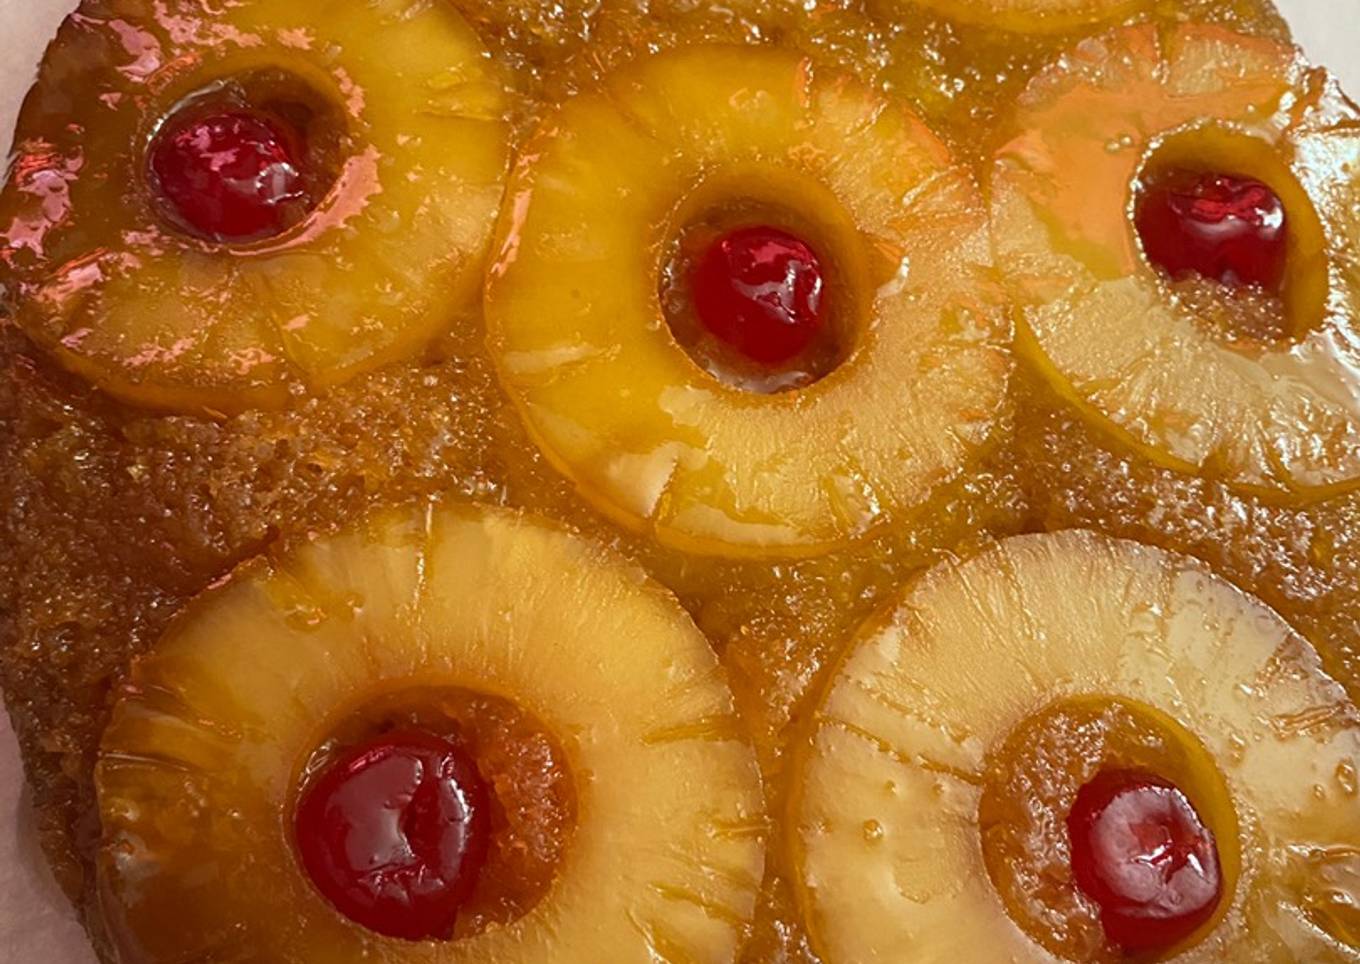 Steps to Make Quick Crockpot pineapple upside down cake